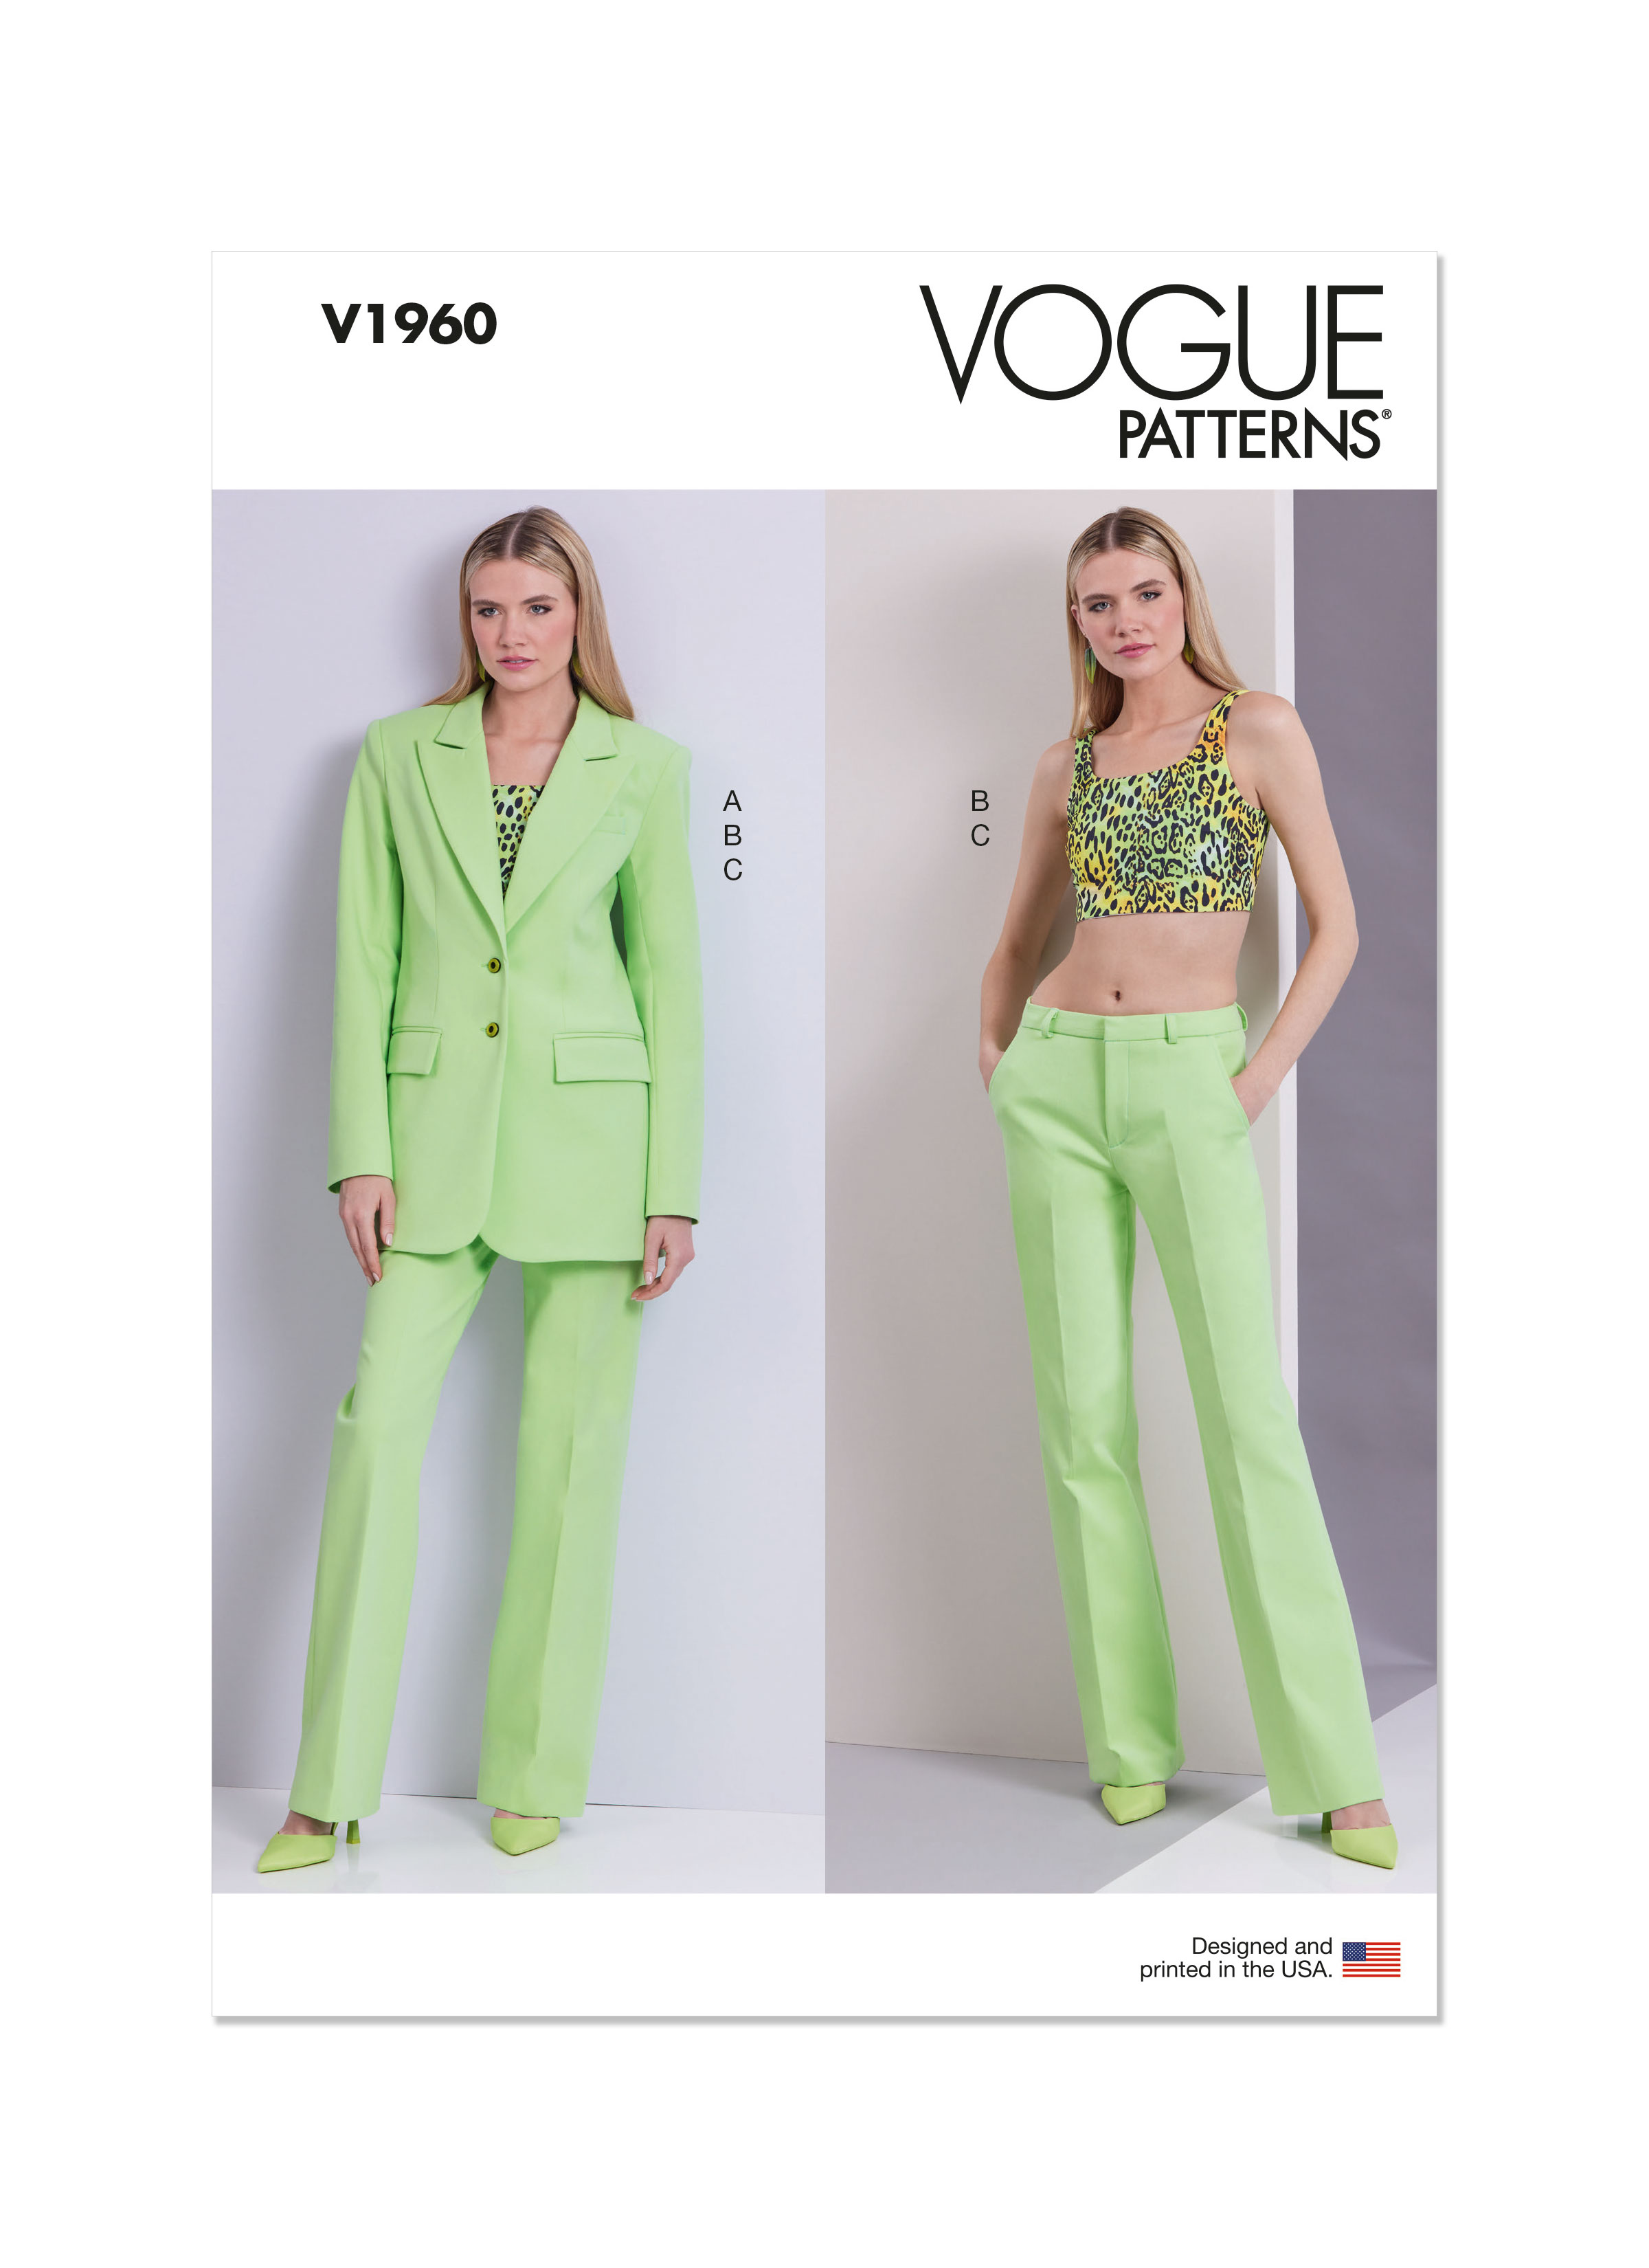 Vogue Patterns 1960 Misses’ Jacket, Knit Top and Pants